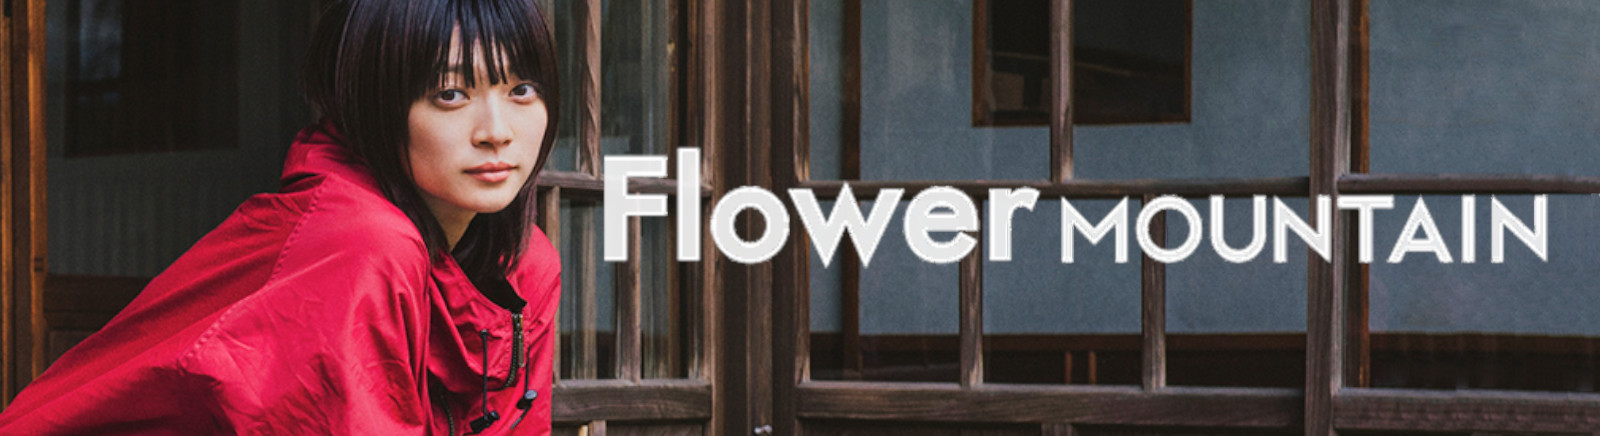 Juppen: Flower Mountain Schnürschuhe für Damen online shoppen